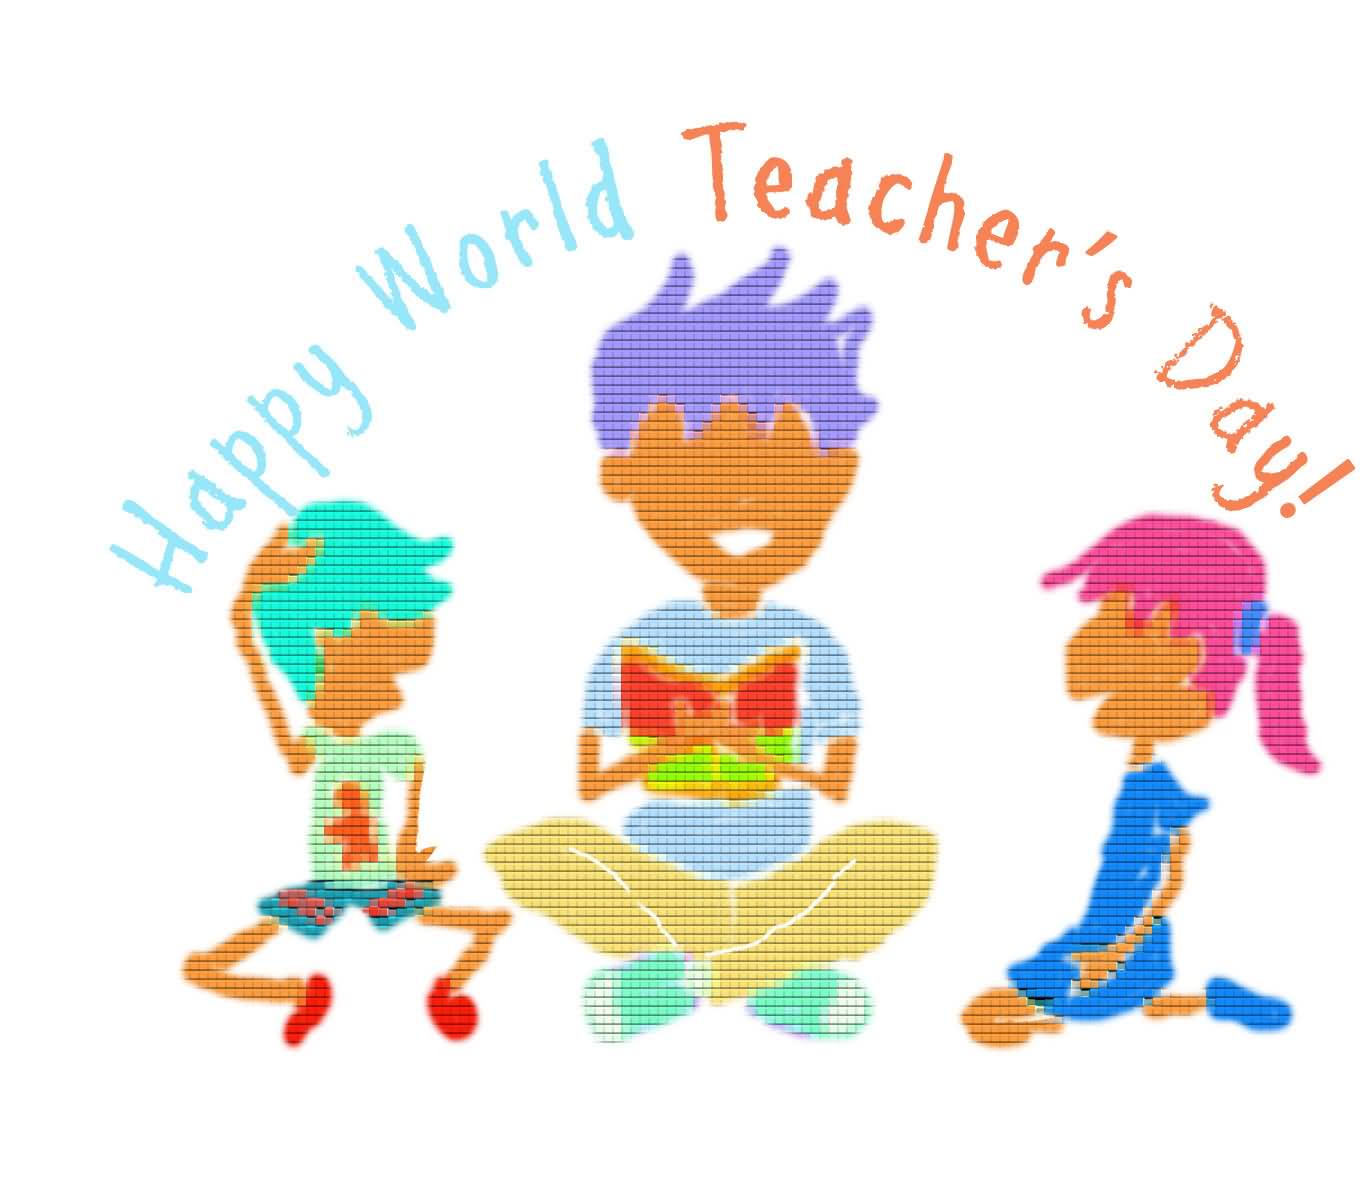 Happy World Teachers Day 2016